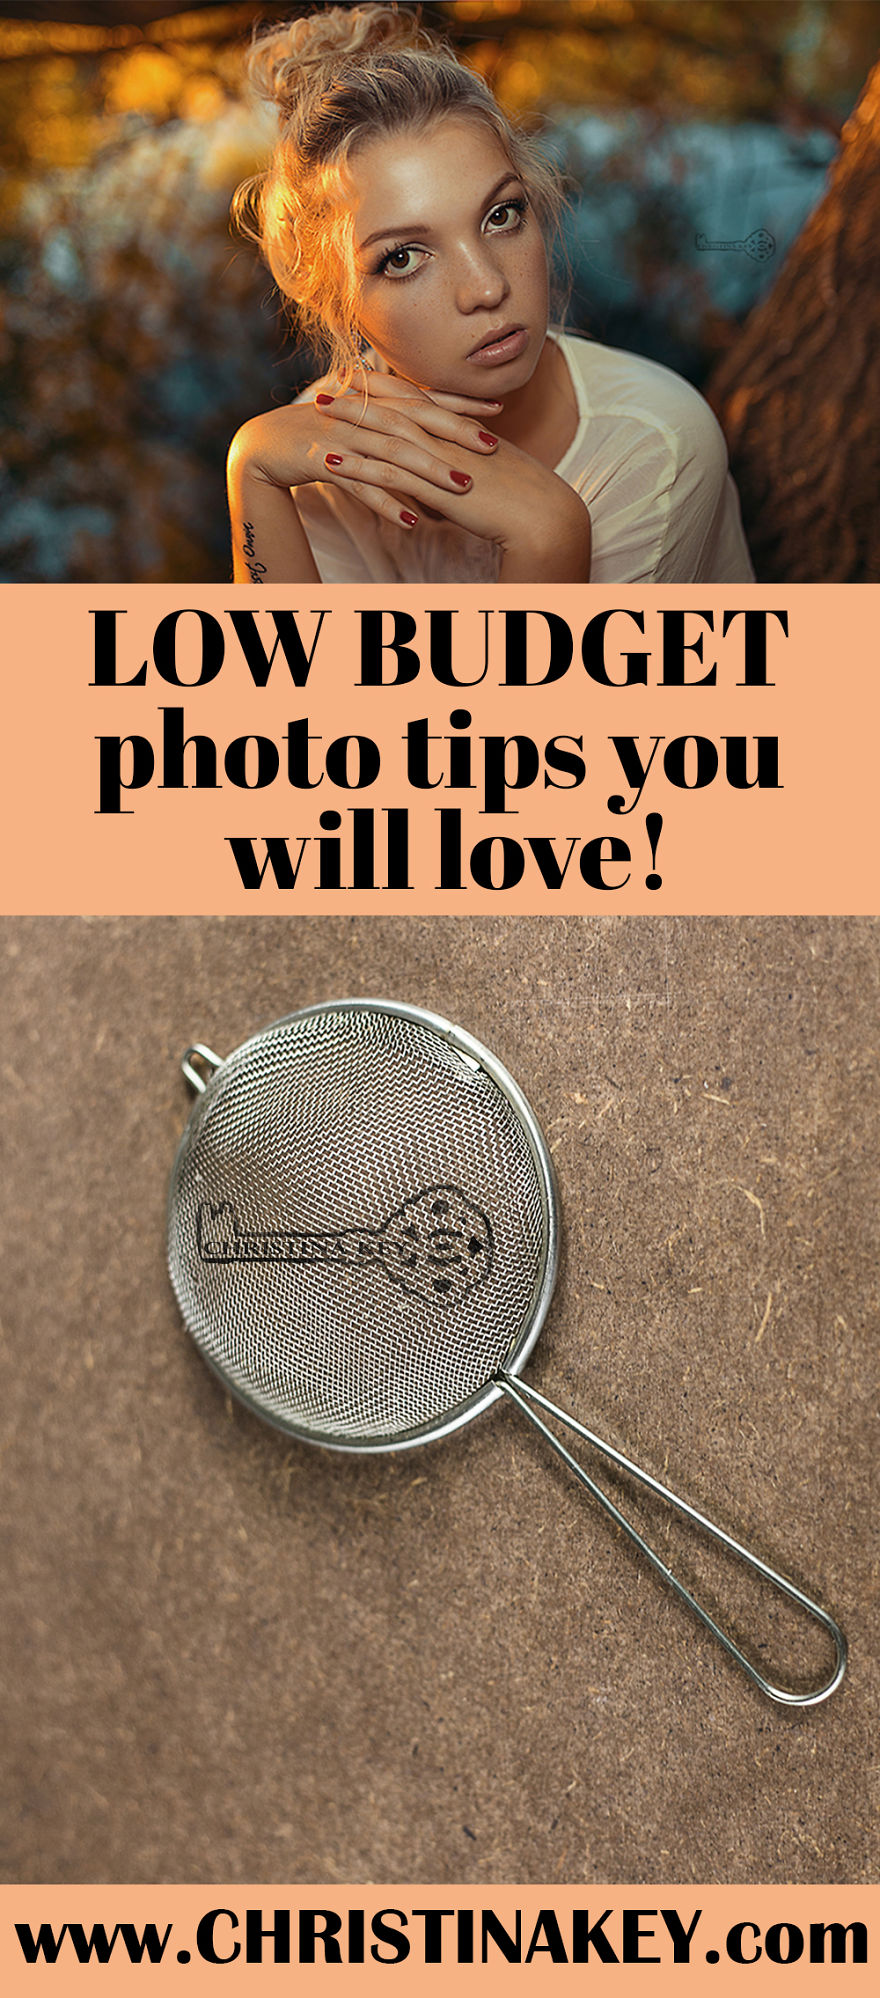 Low Budget Photo Tips By Christina Key